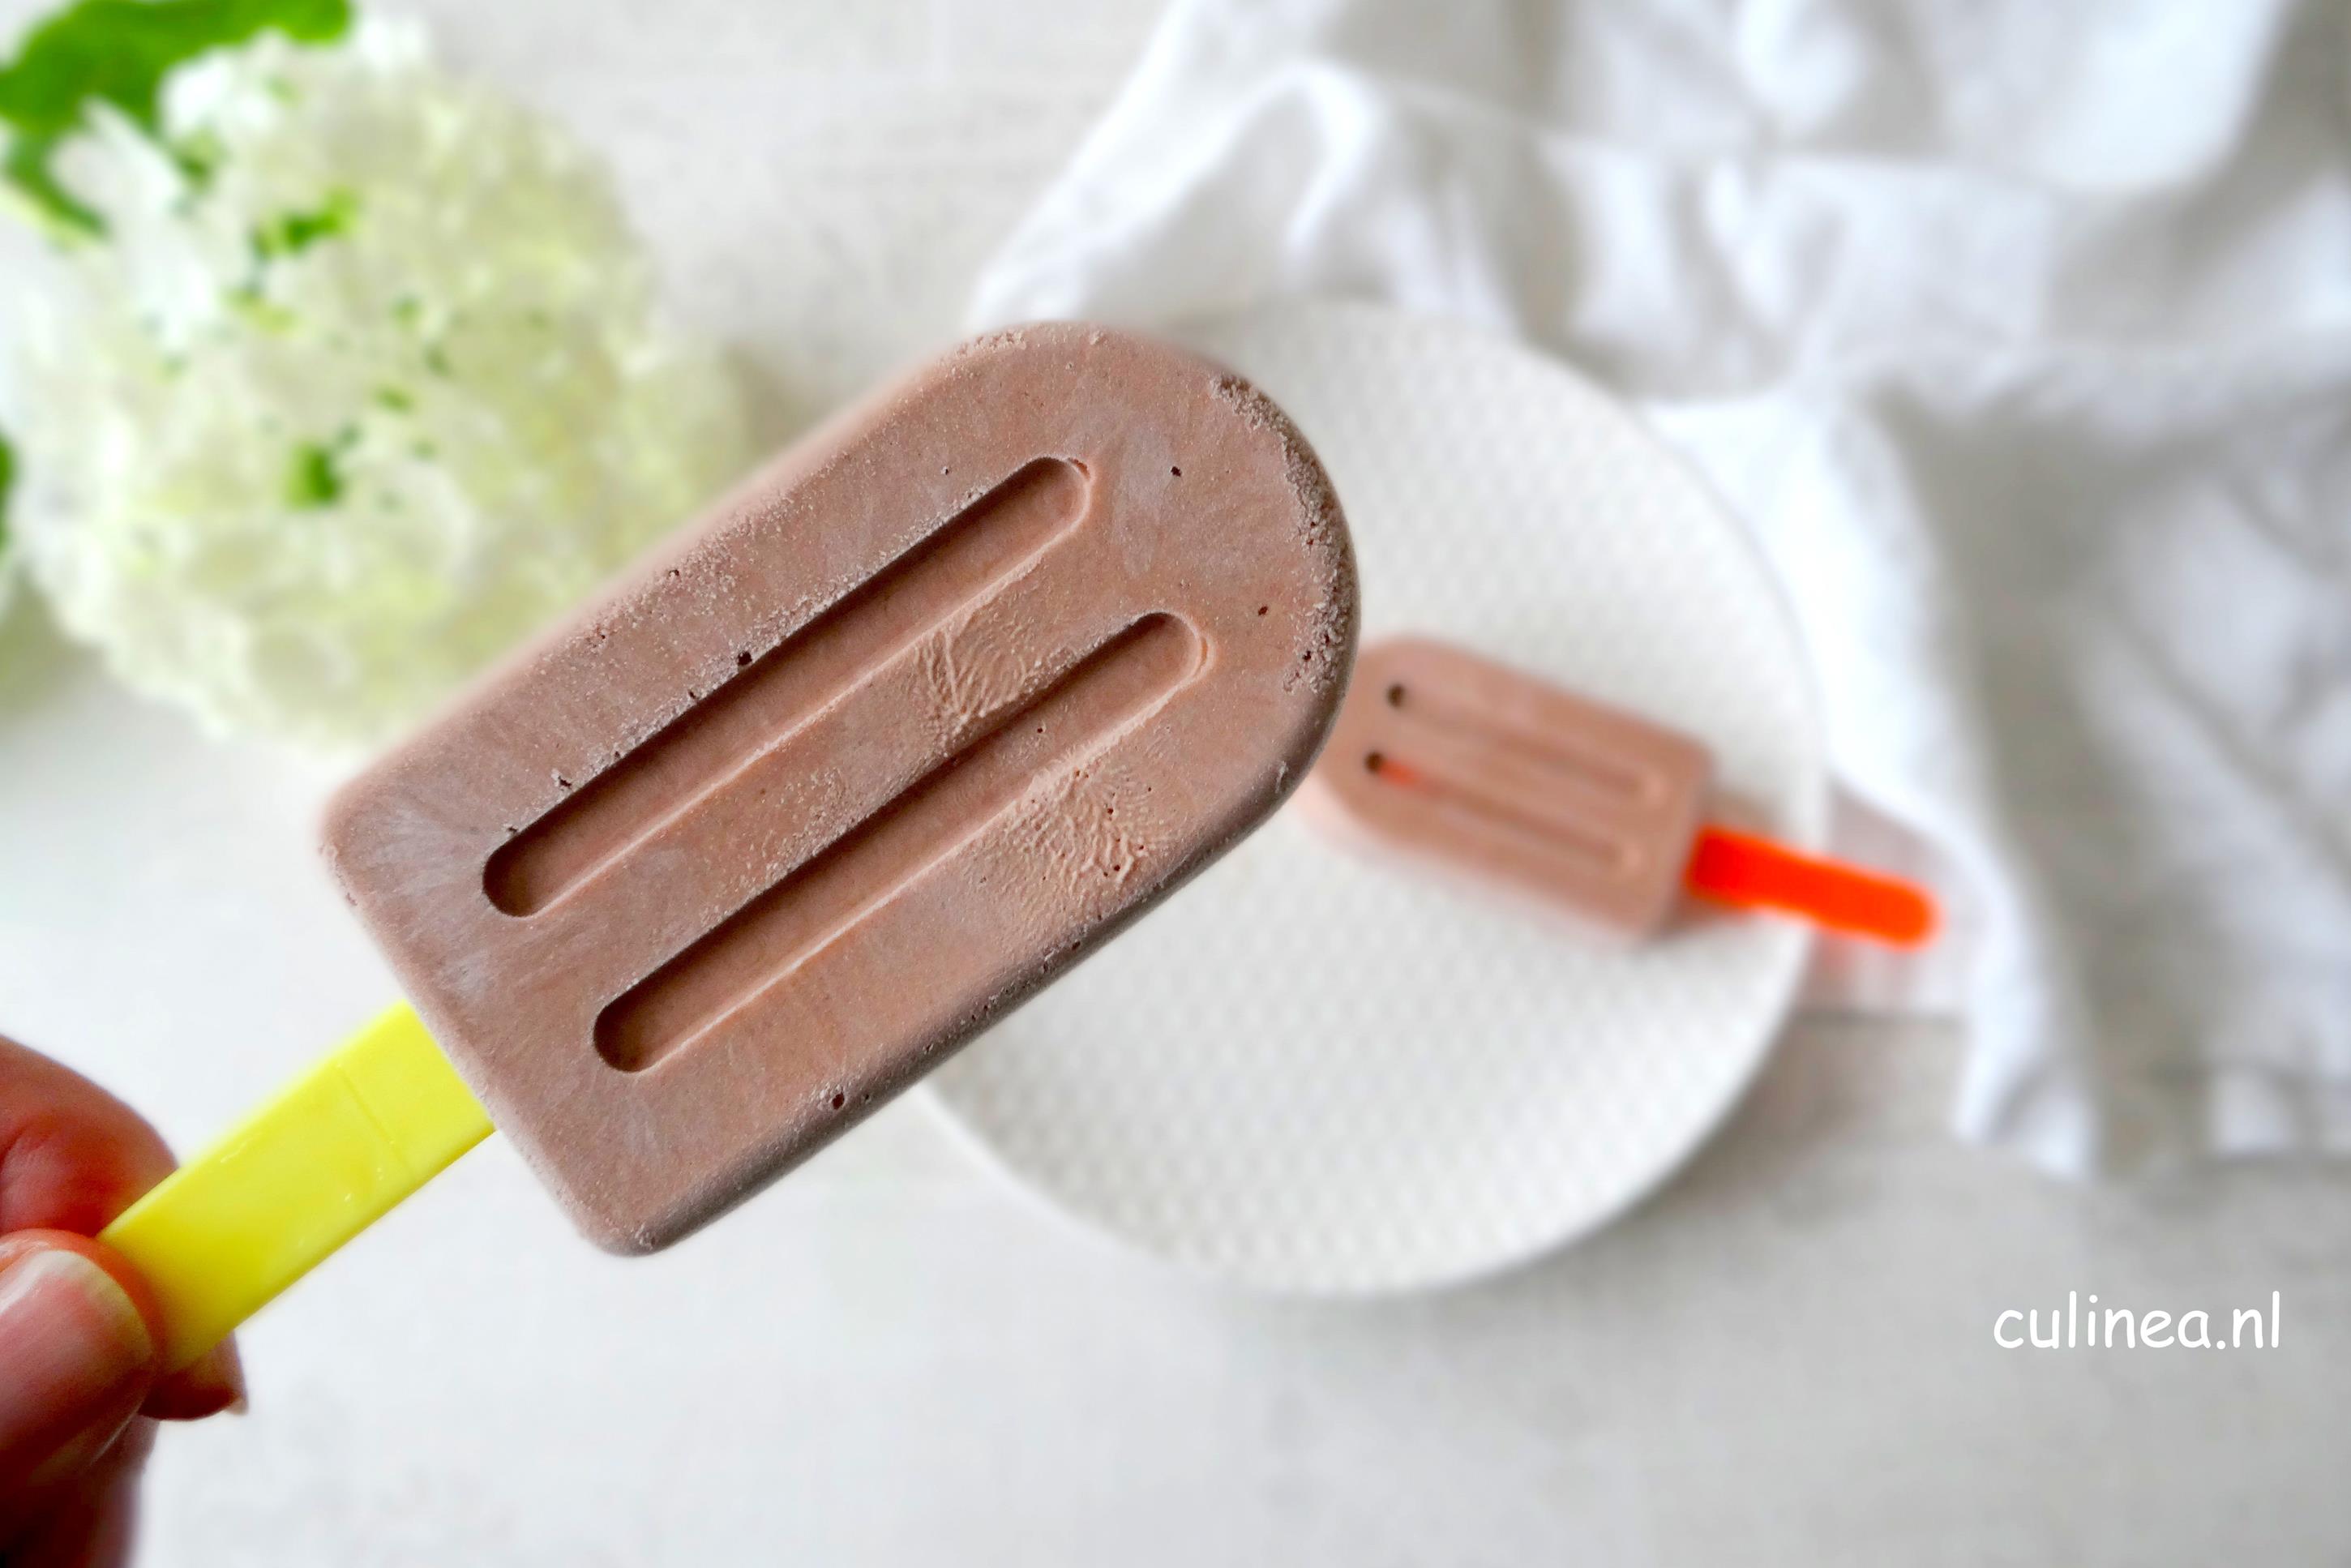 Stap Gelukkig is dat Huh Chocolade fudge ijsjes - Culinea.nl;